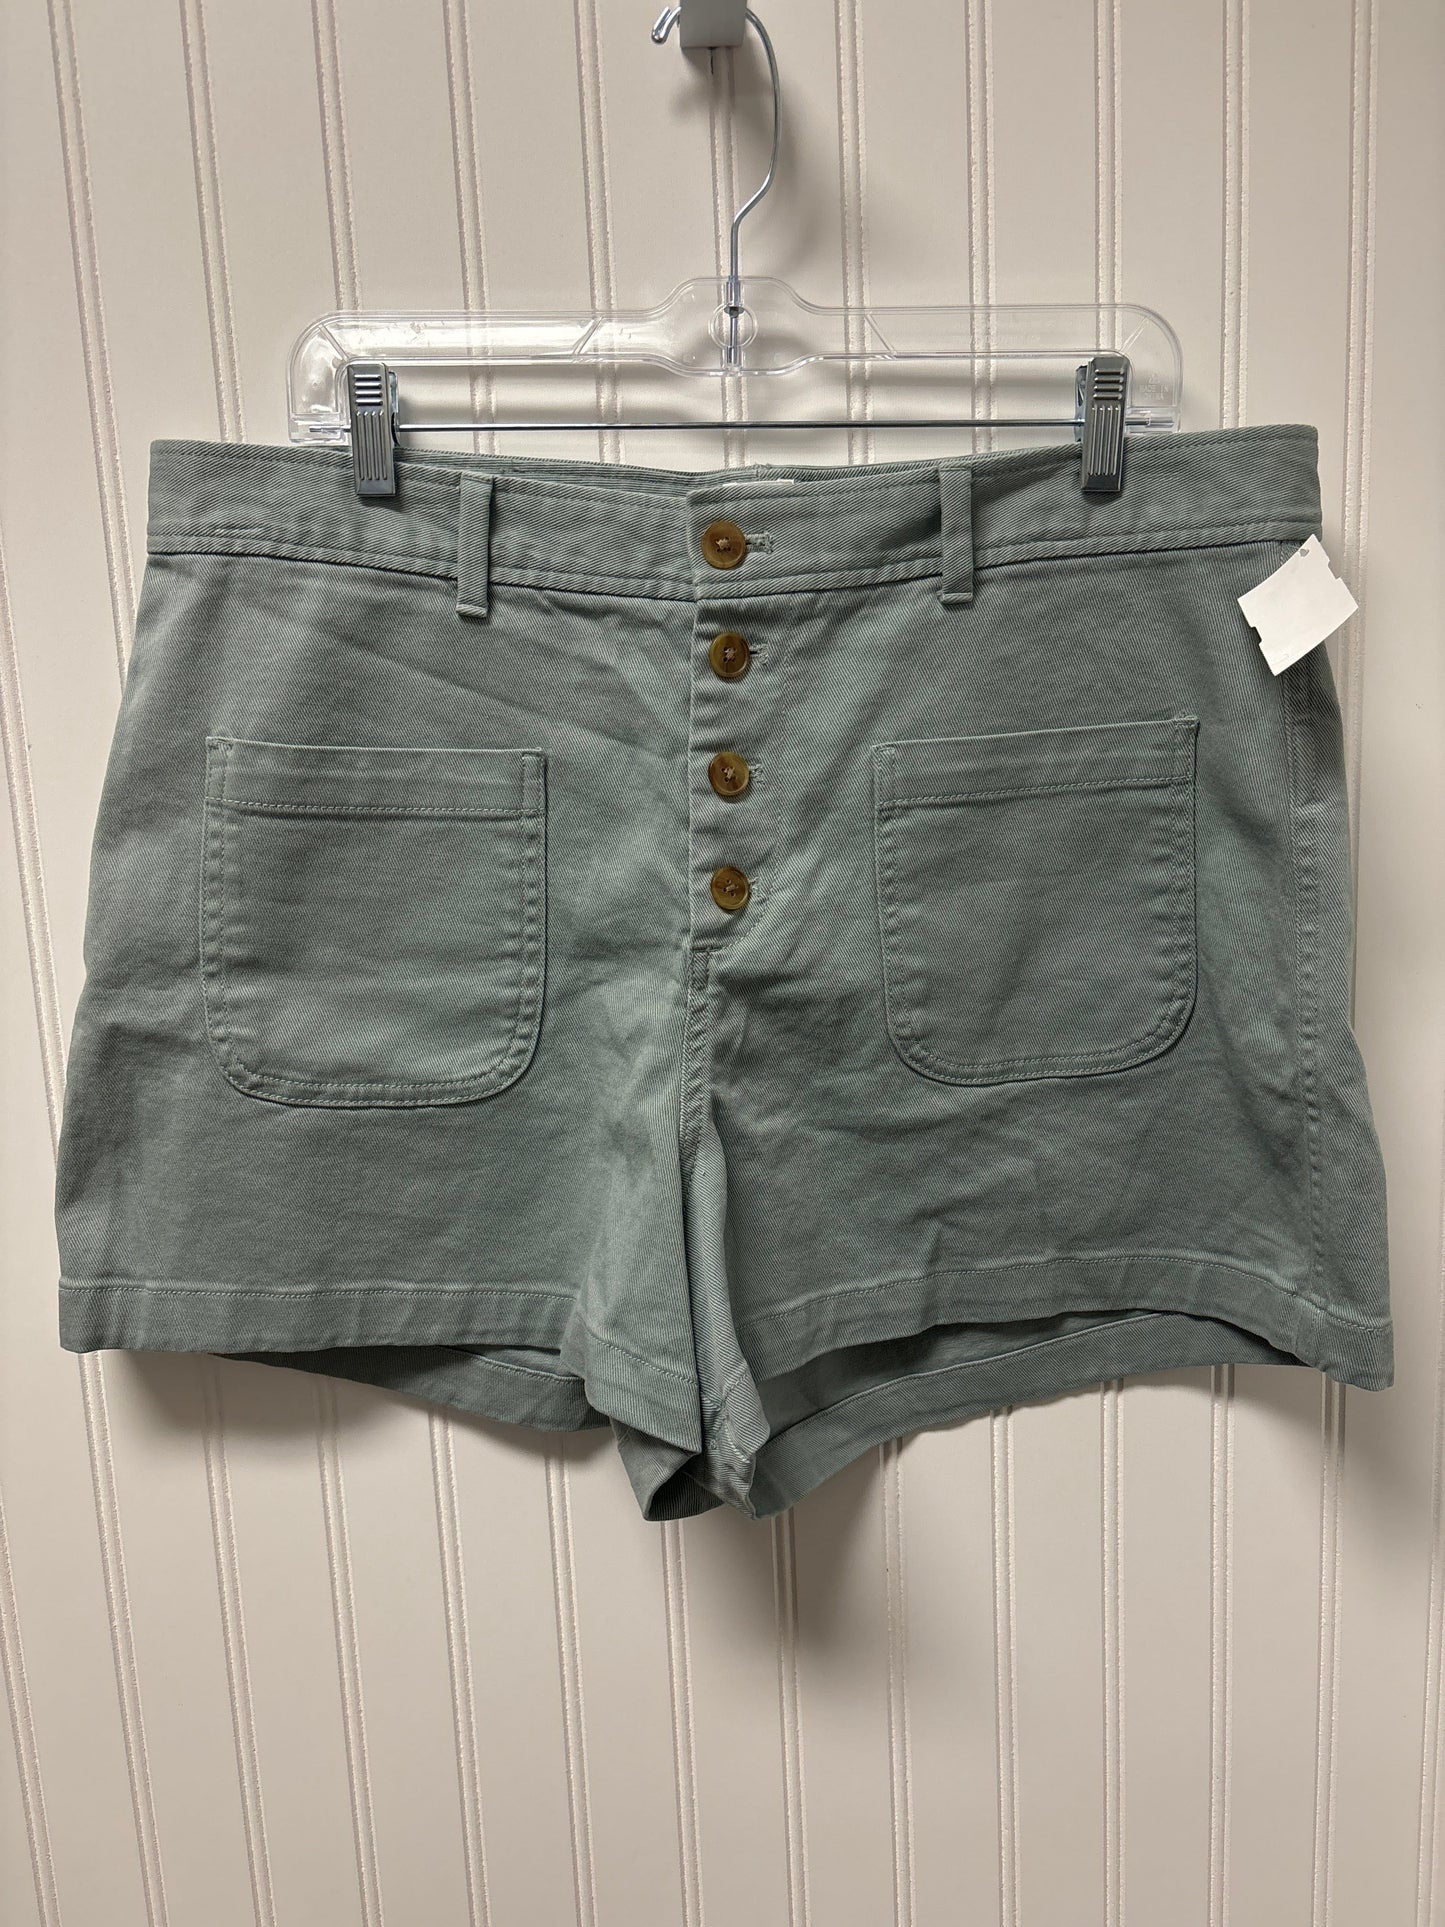 Teal Shorts Gap, Size 16